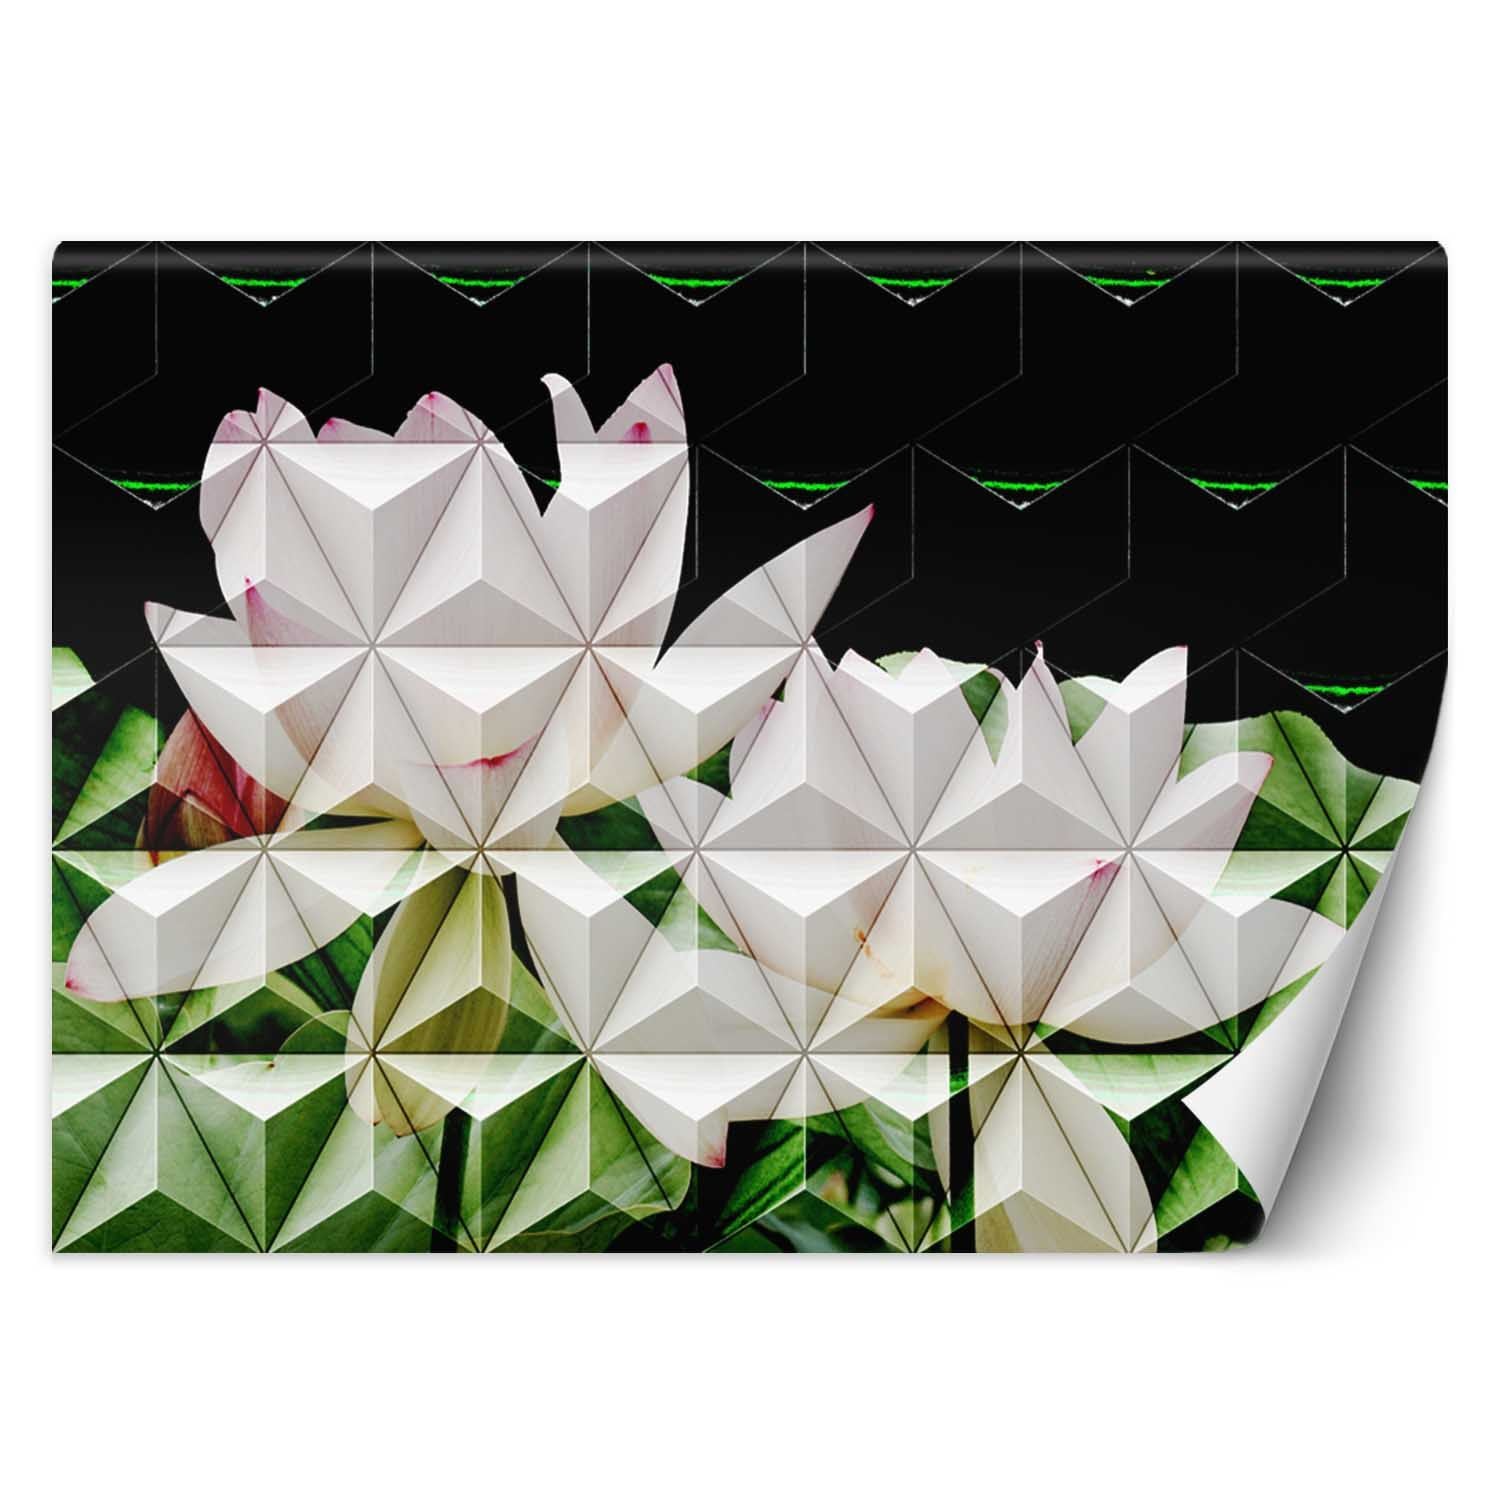 Trend24 – Behang – Lotusbloem Geometrisch – Vliesbehang – Behang Woonkamer – Fotobehang – 350×245 cm – Incl. behanglijm